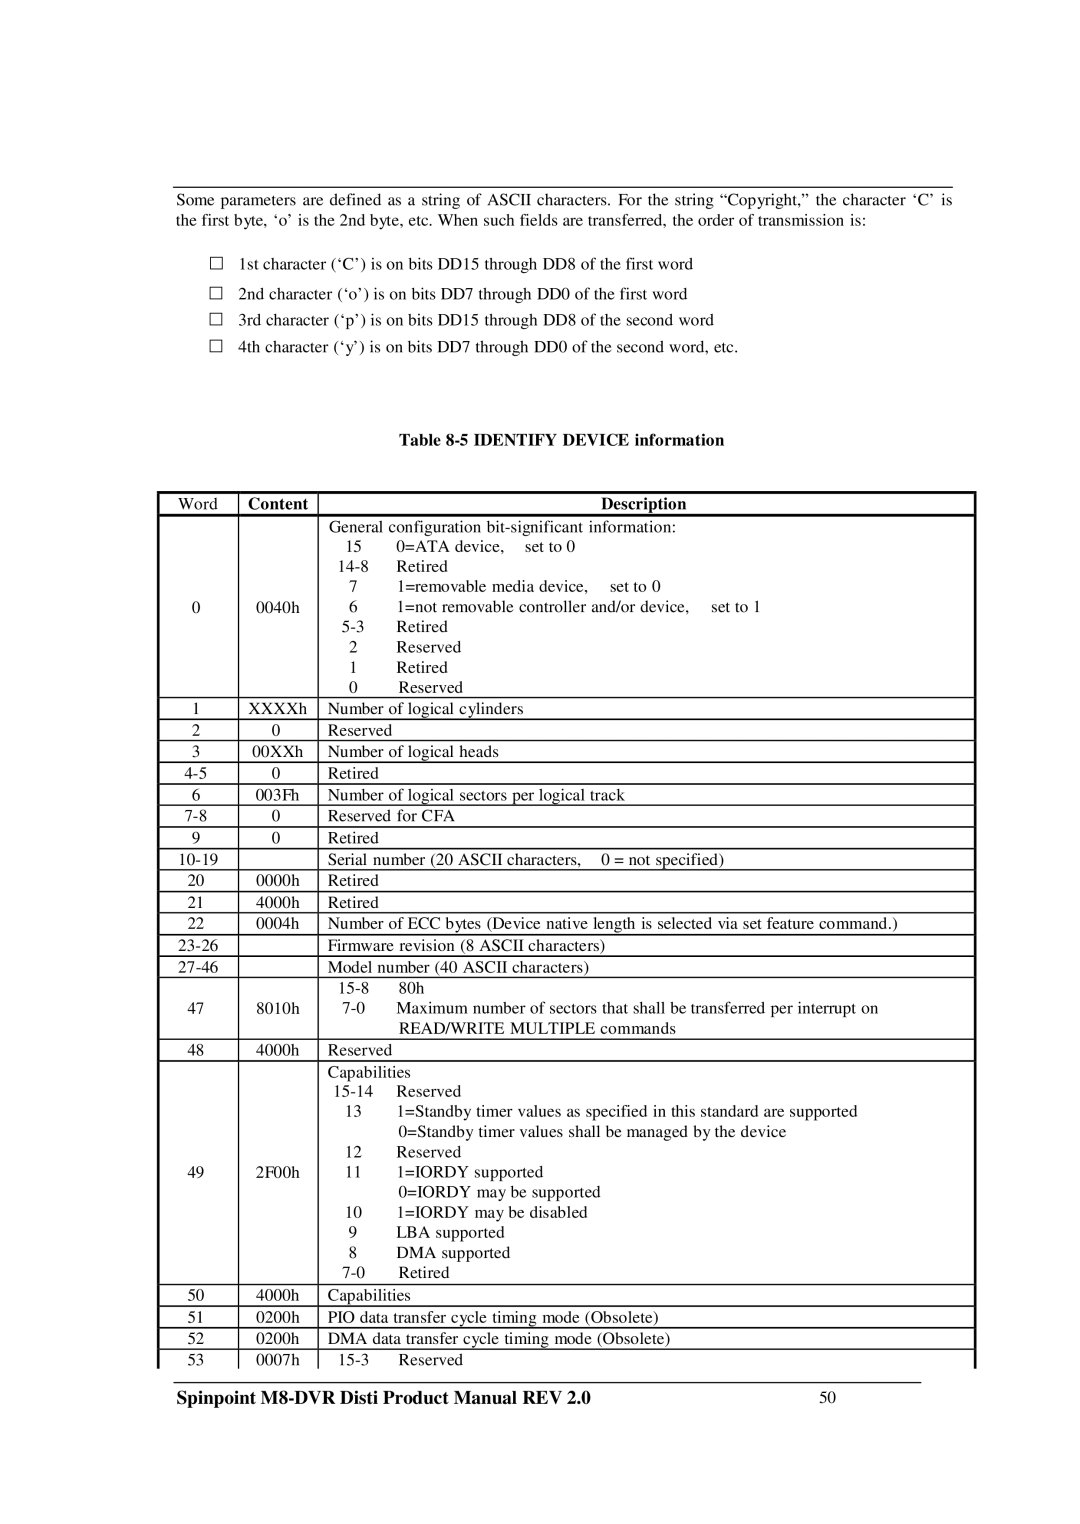 Samsung M8-DVR manual Identify Device information, Content Description 